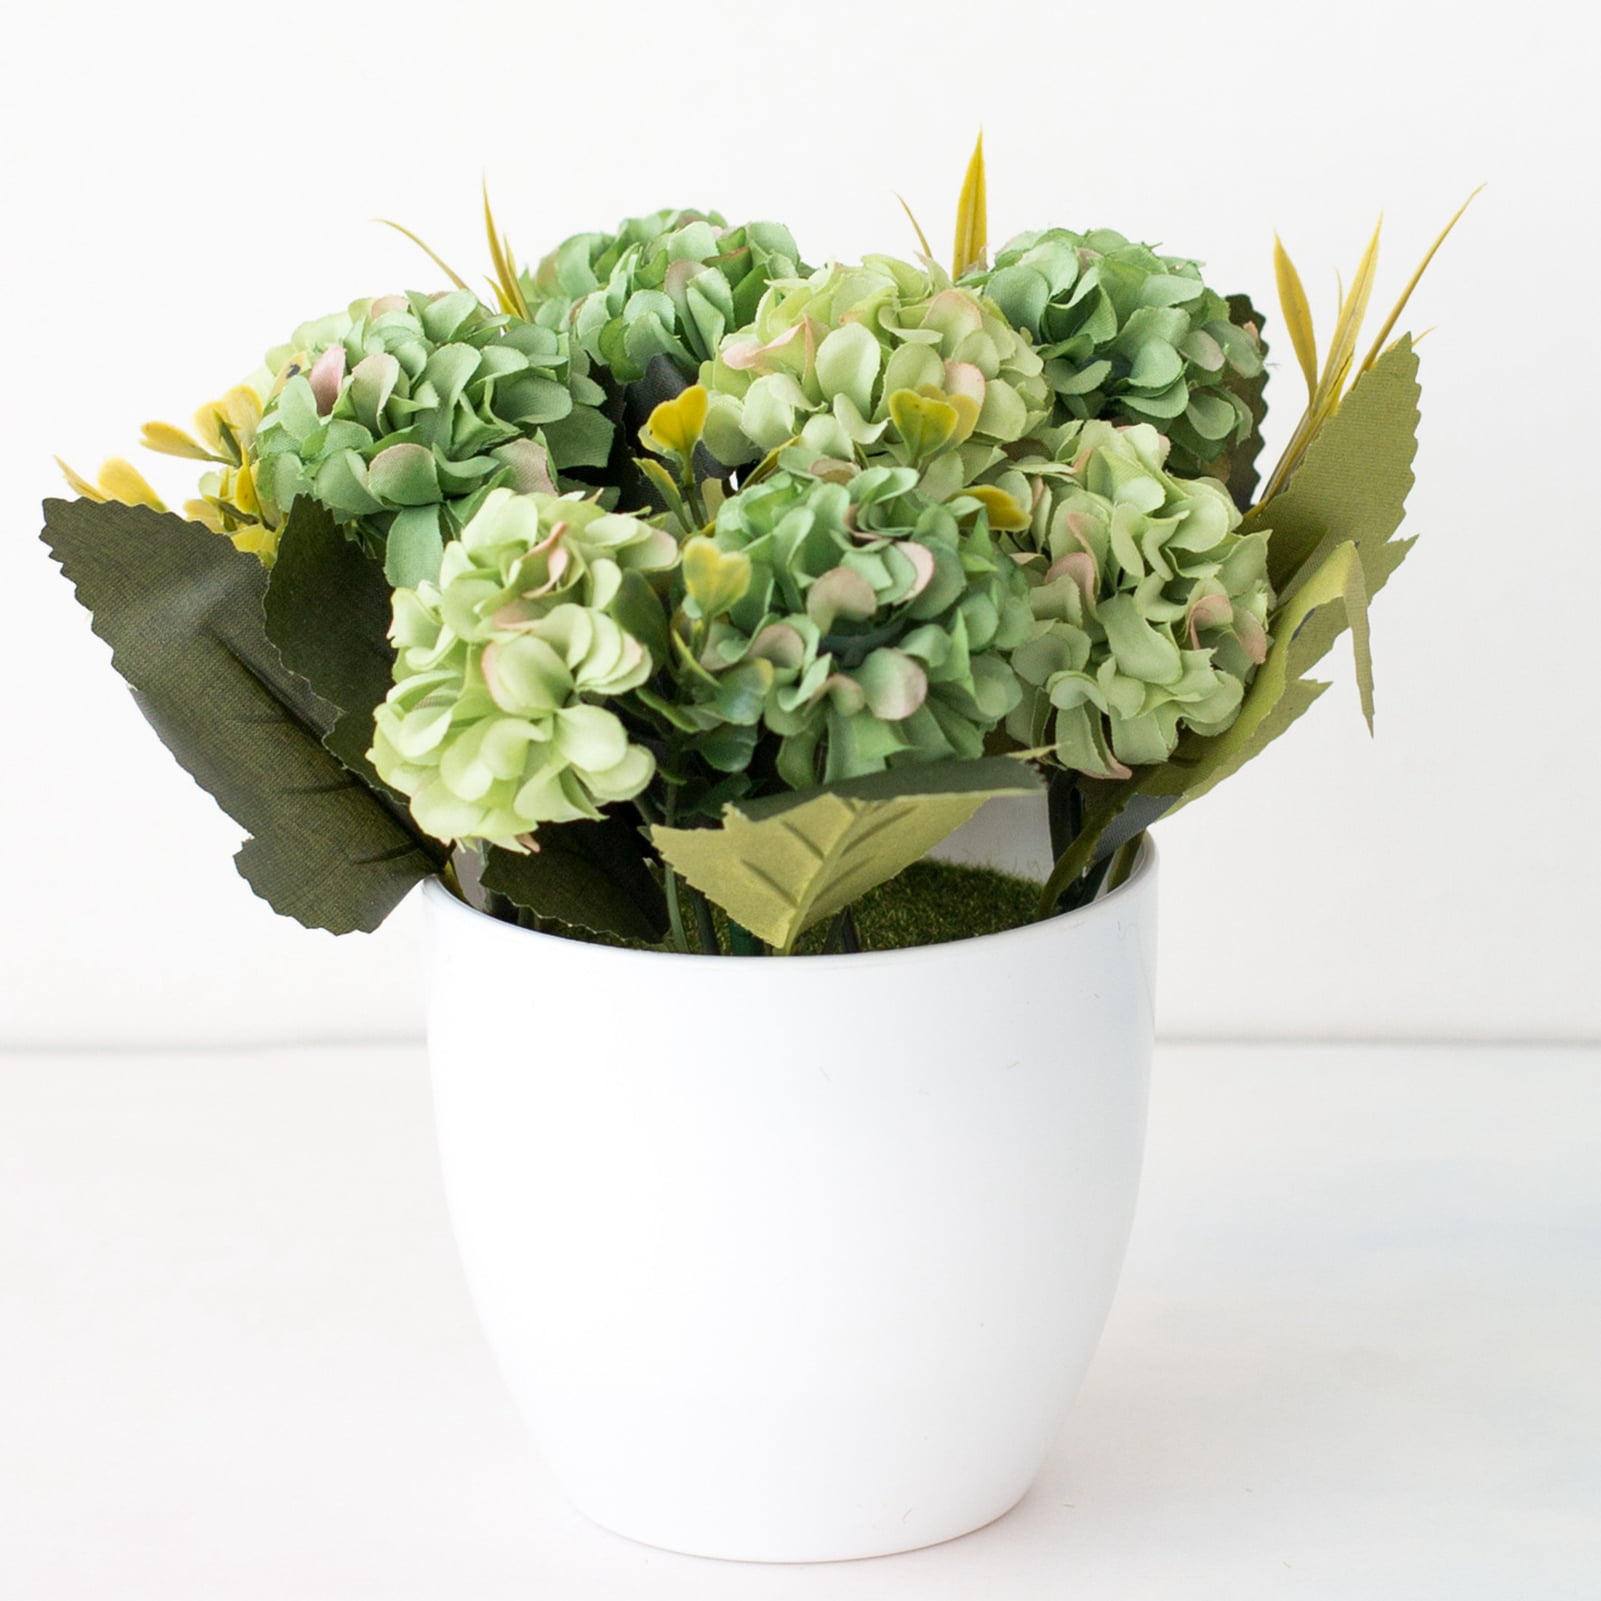 Details about   Artificial Pot Flower Decorative Fake Small Bonsai Home Garden Indoor Decor x 1 